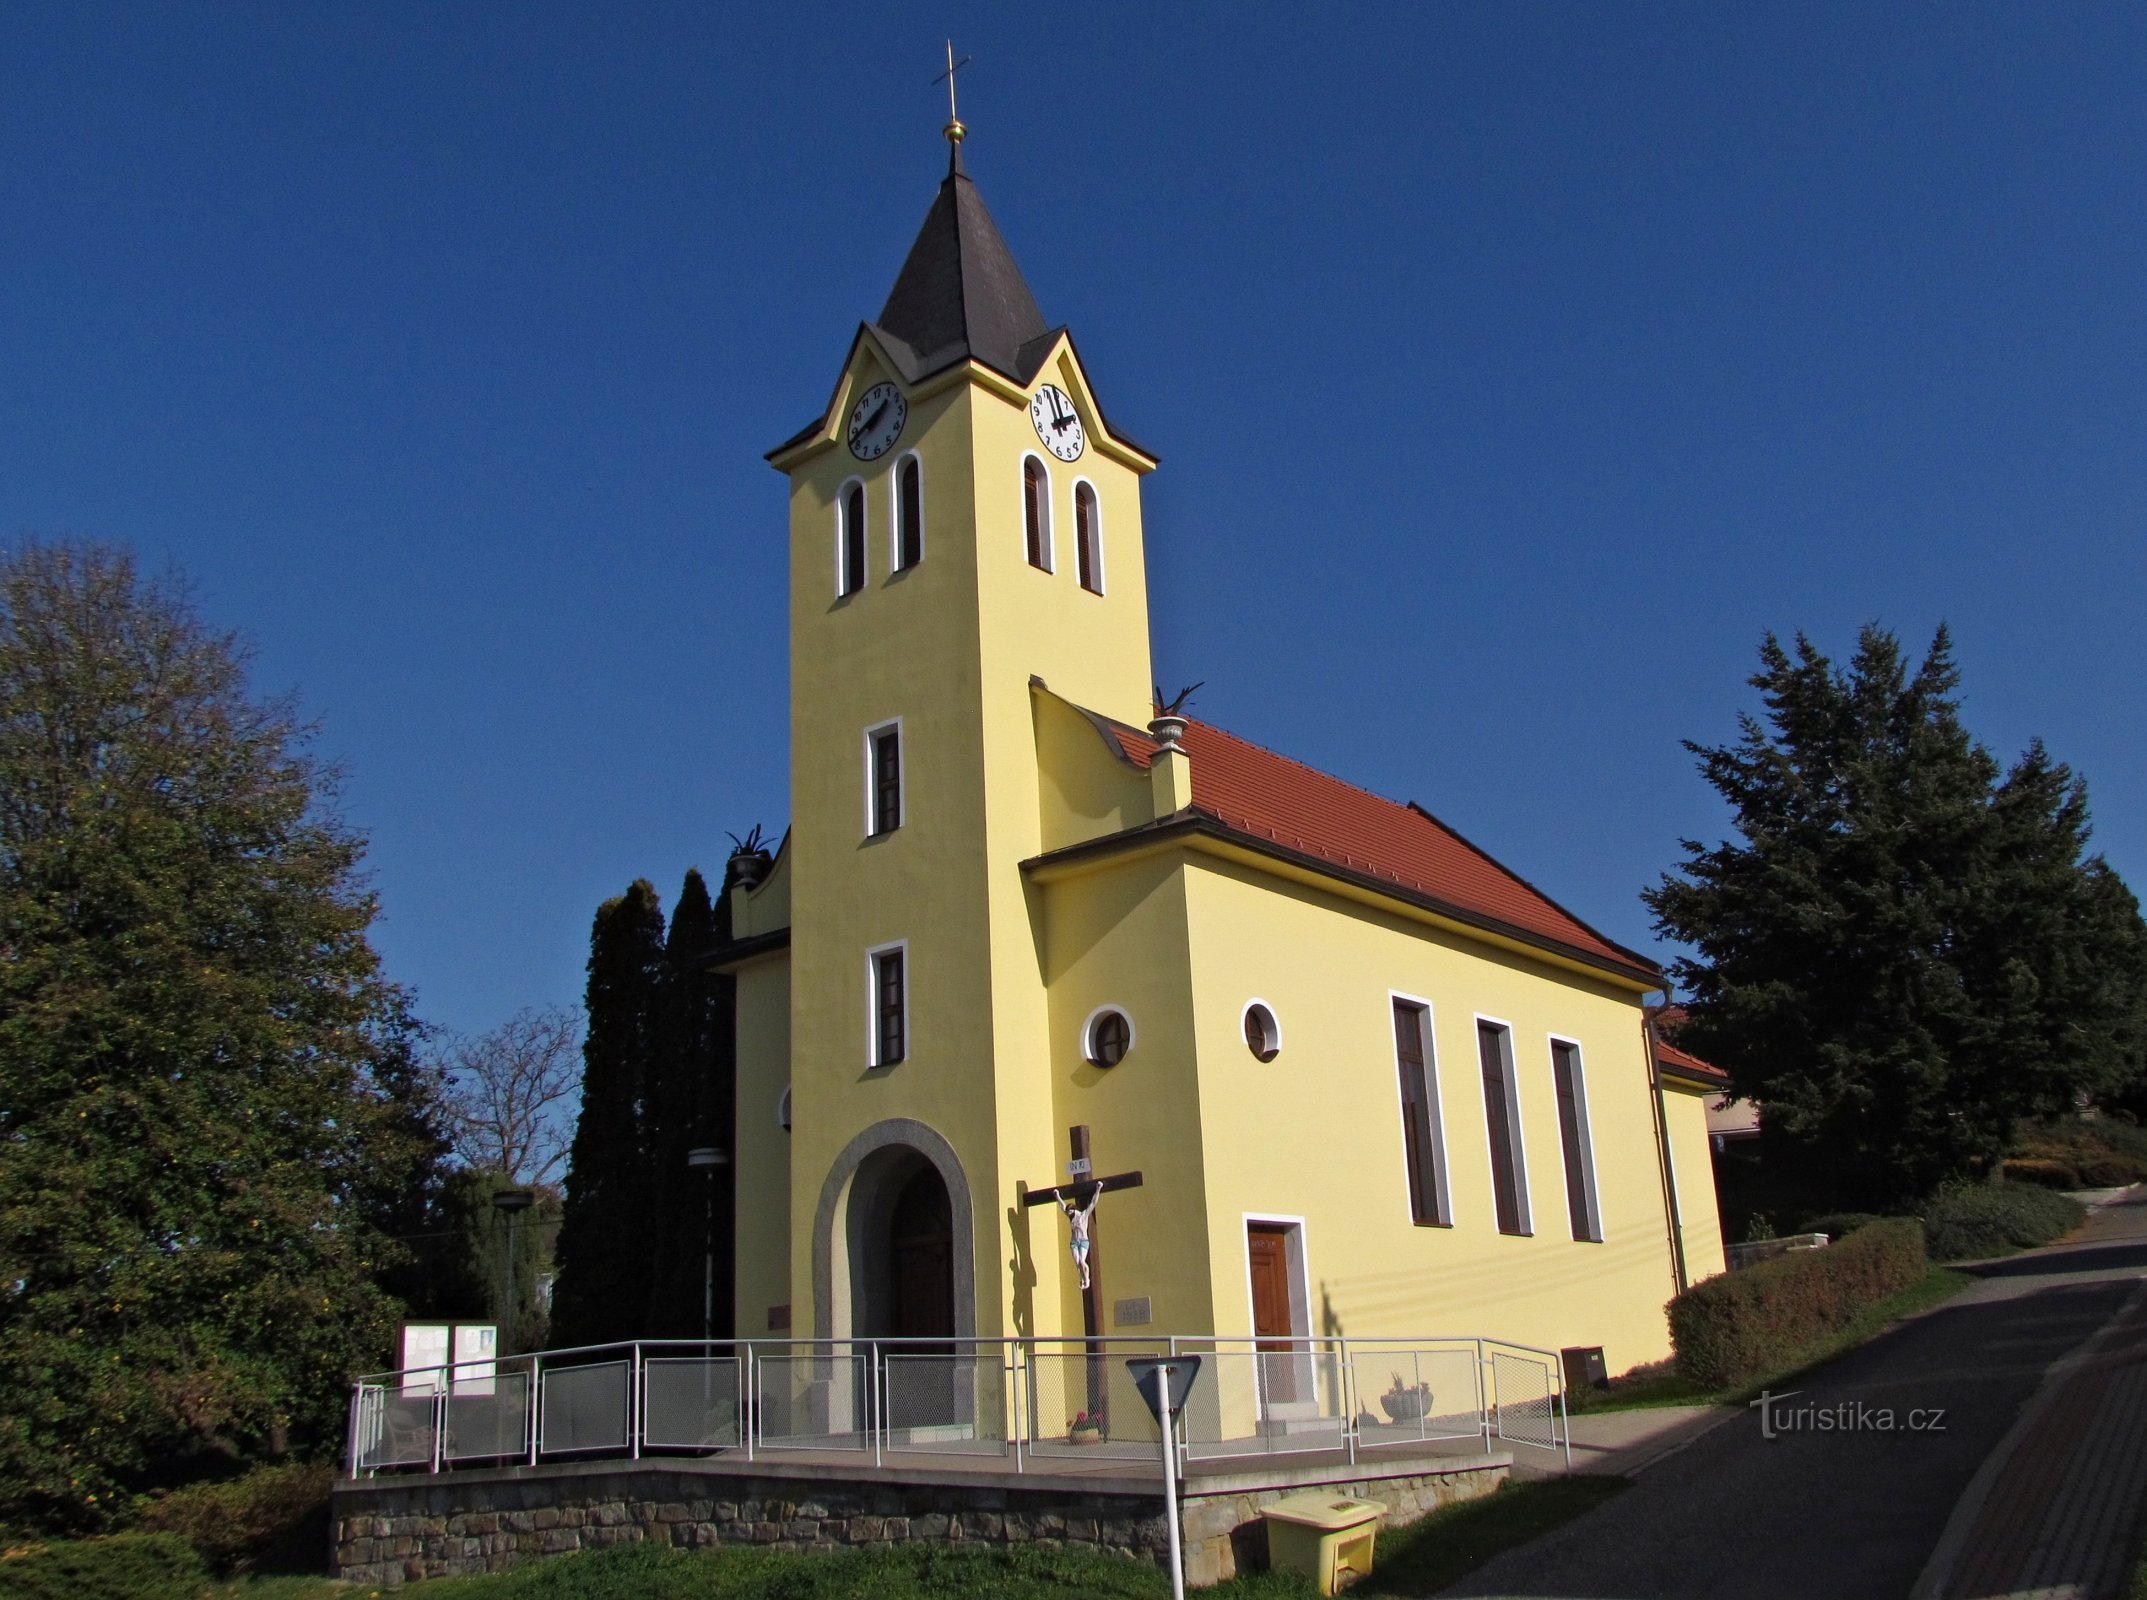 St. Anthony of Padua Church in Komárov